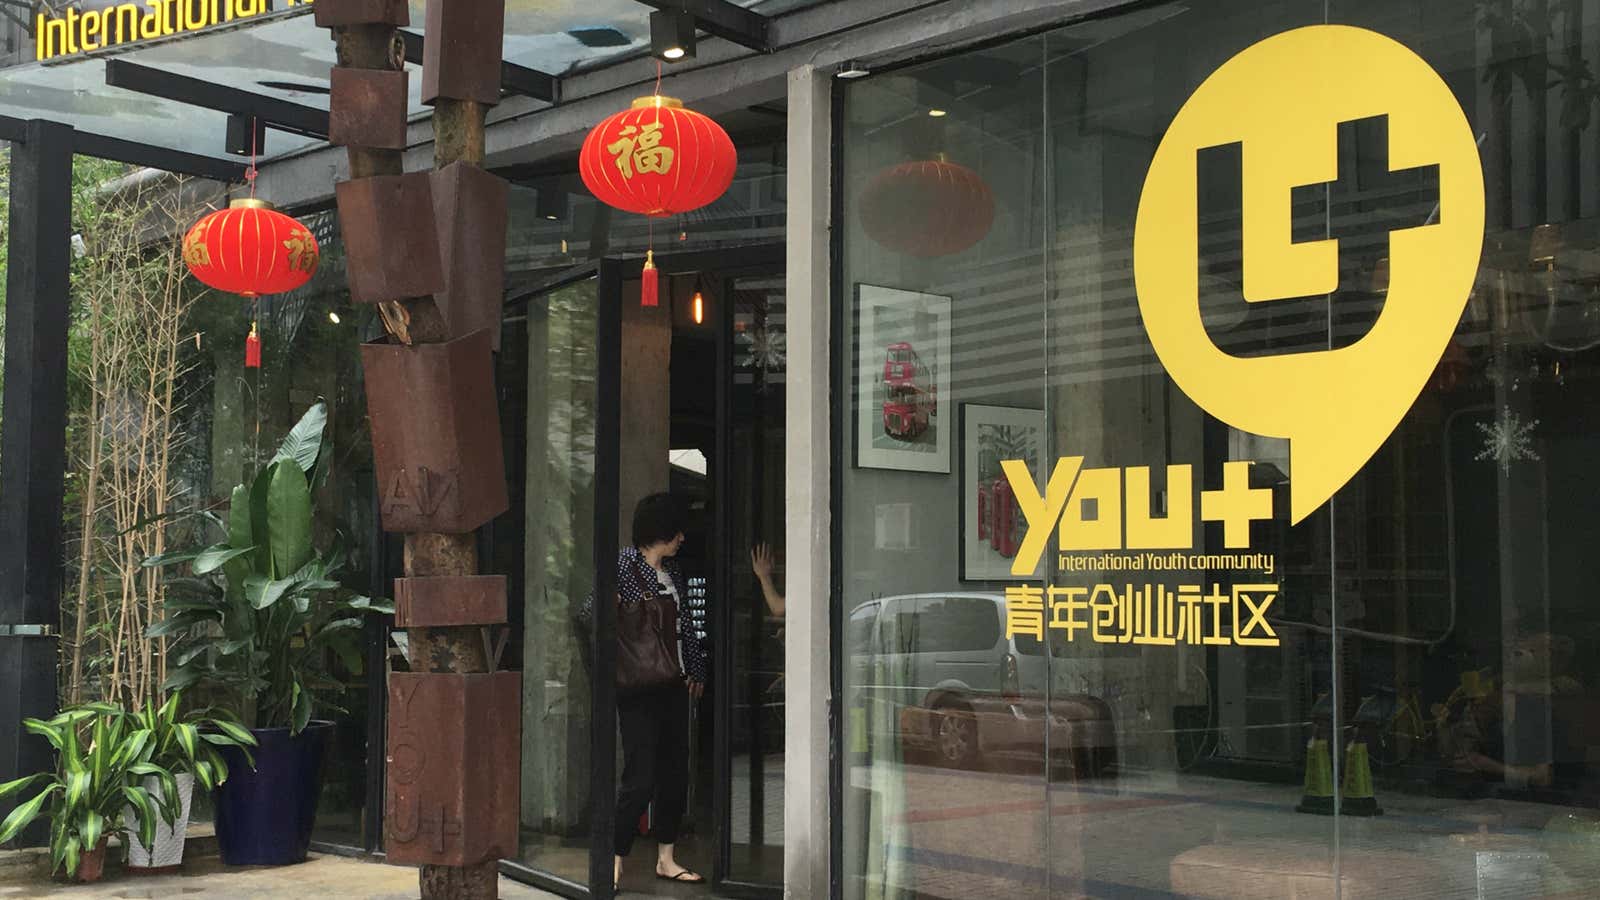 The Guangzhou Baogang branch of You+, a Chinese co-living space.